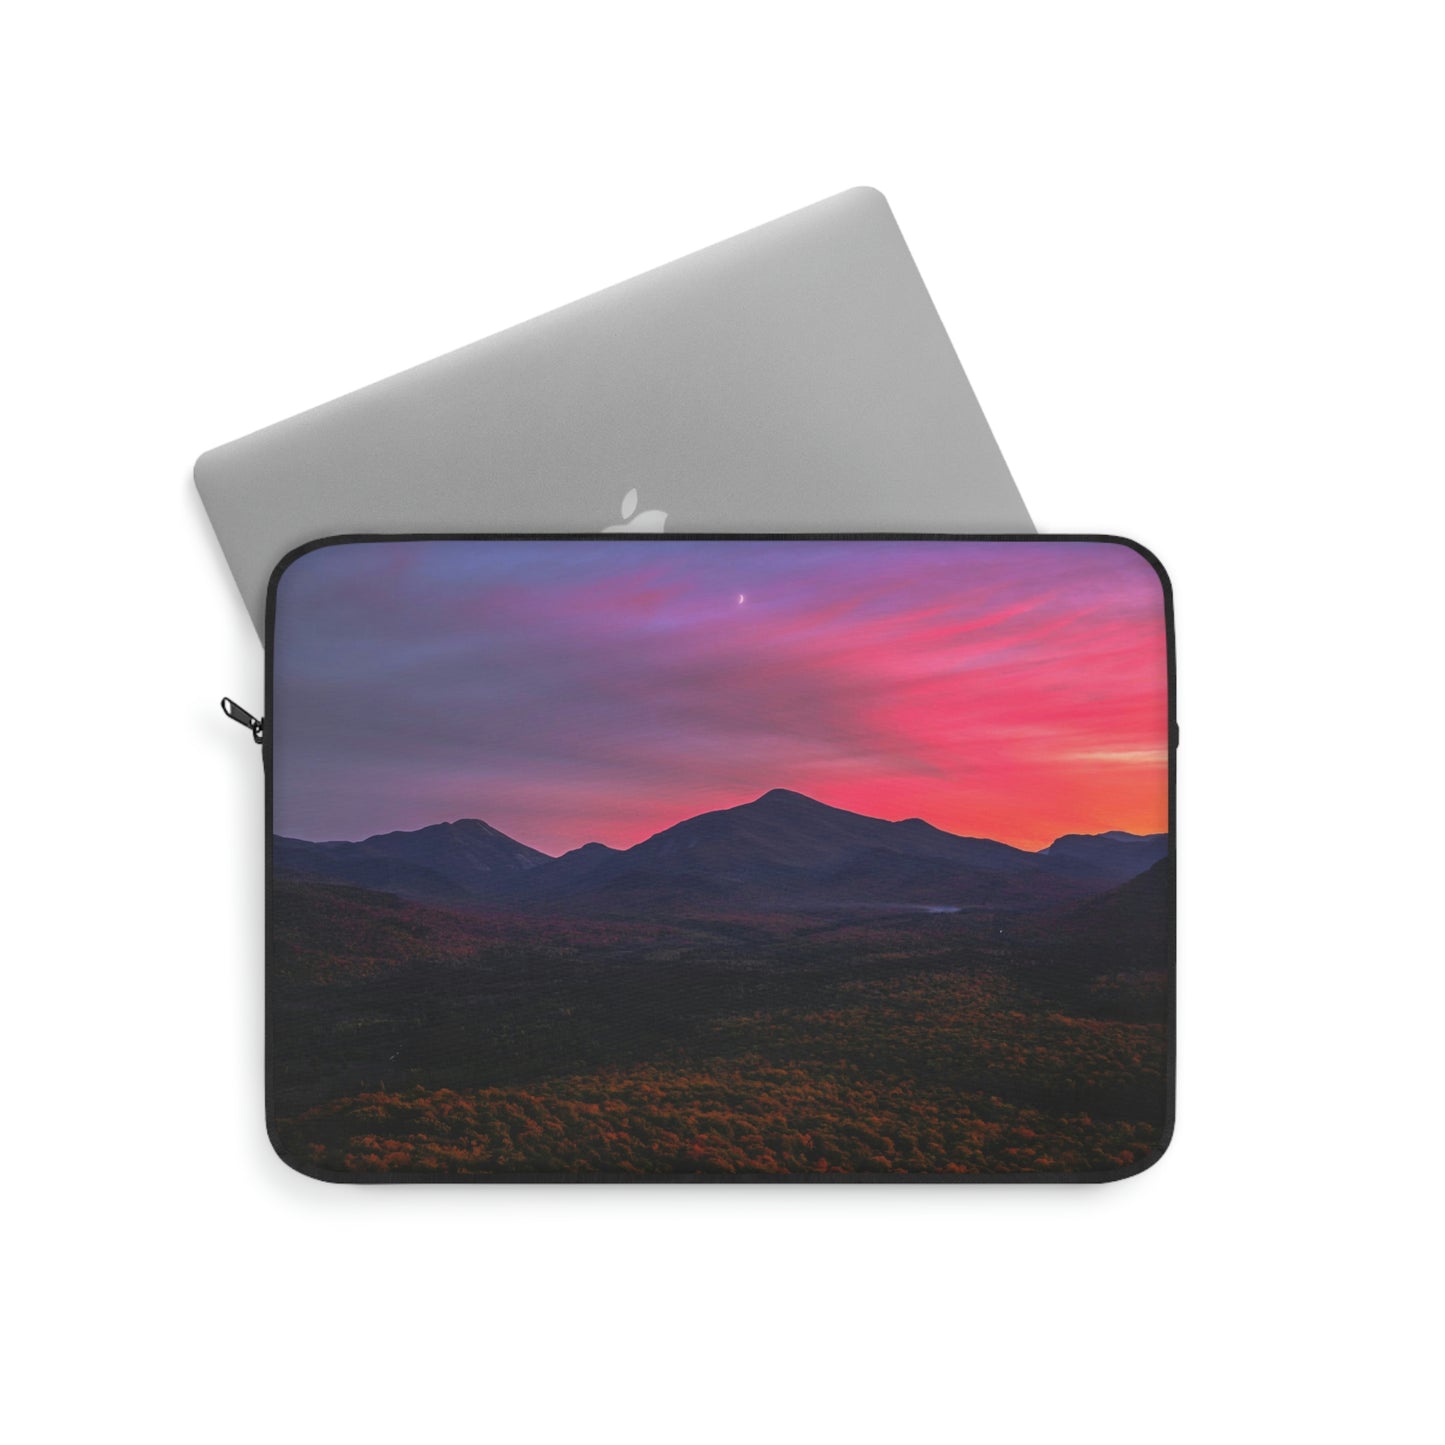 Laptop  Sleeve - Mt. Van Hoevenberg Sunset